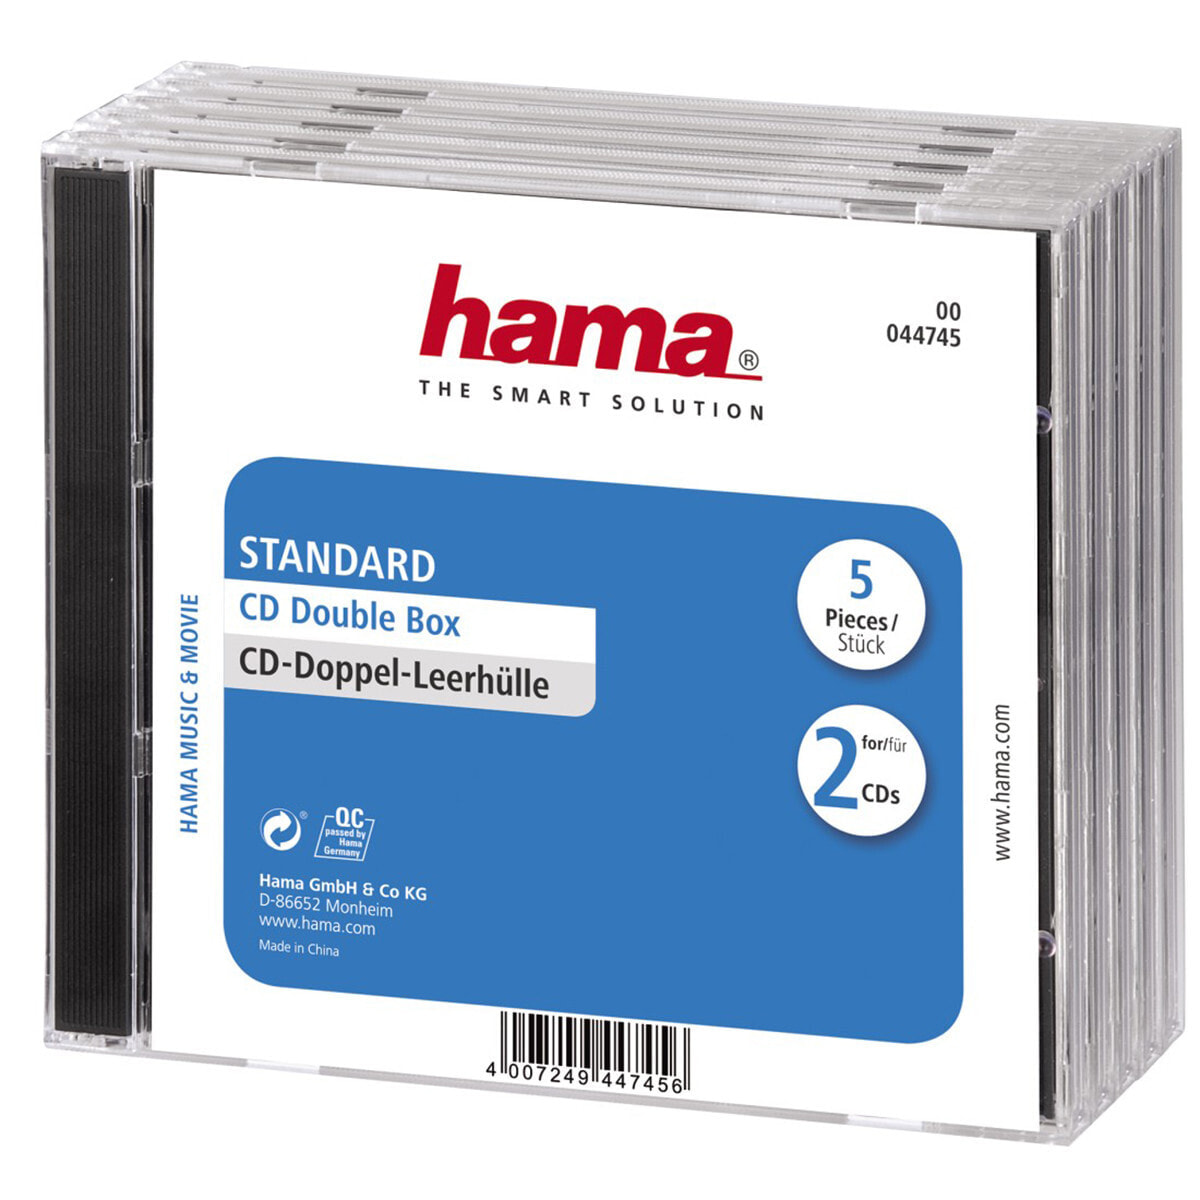 Кейс для дисков Hama CD Double Jewel Case Standard, Pack 5 2 диск (ов) 00044745